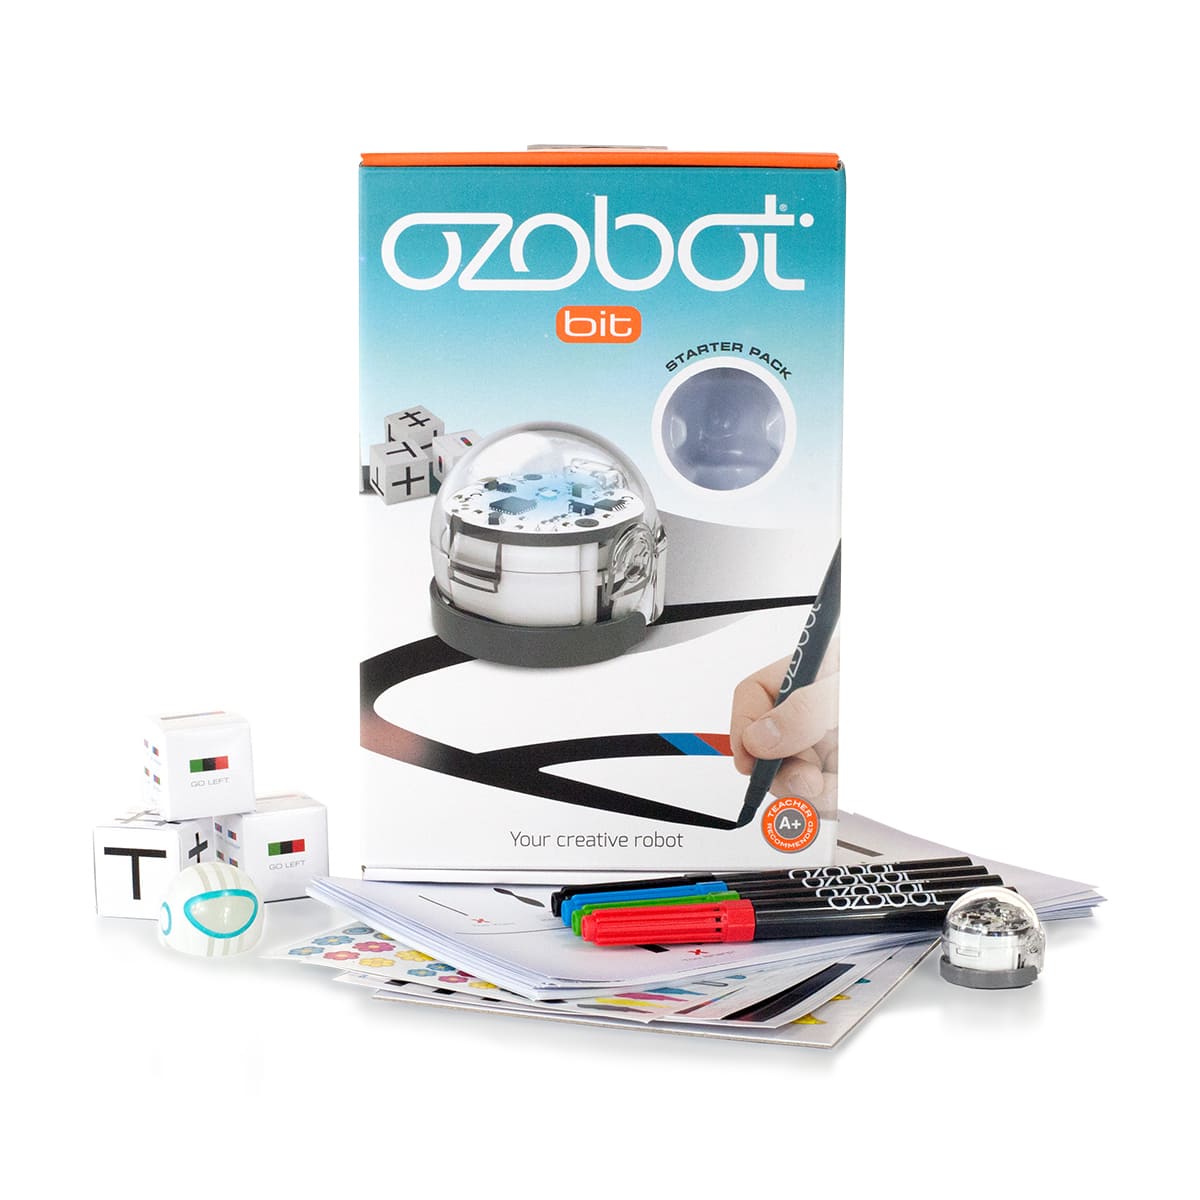 Ozobot Bit Crystal White - Набор для начинающих  